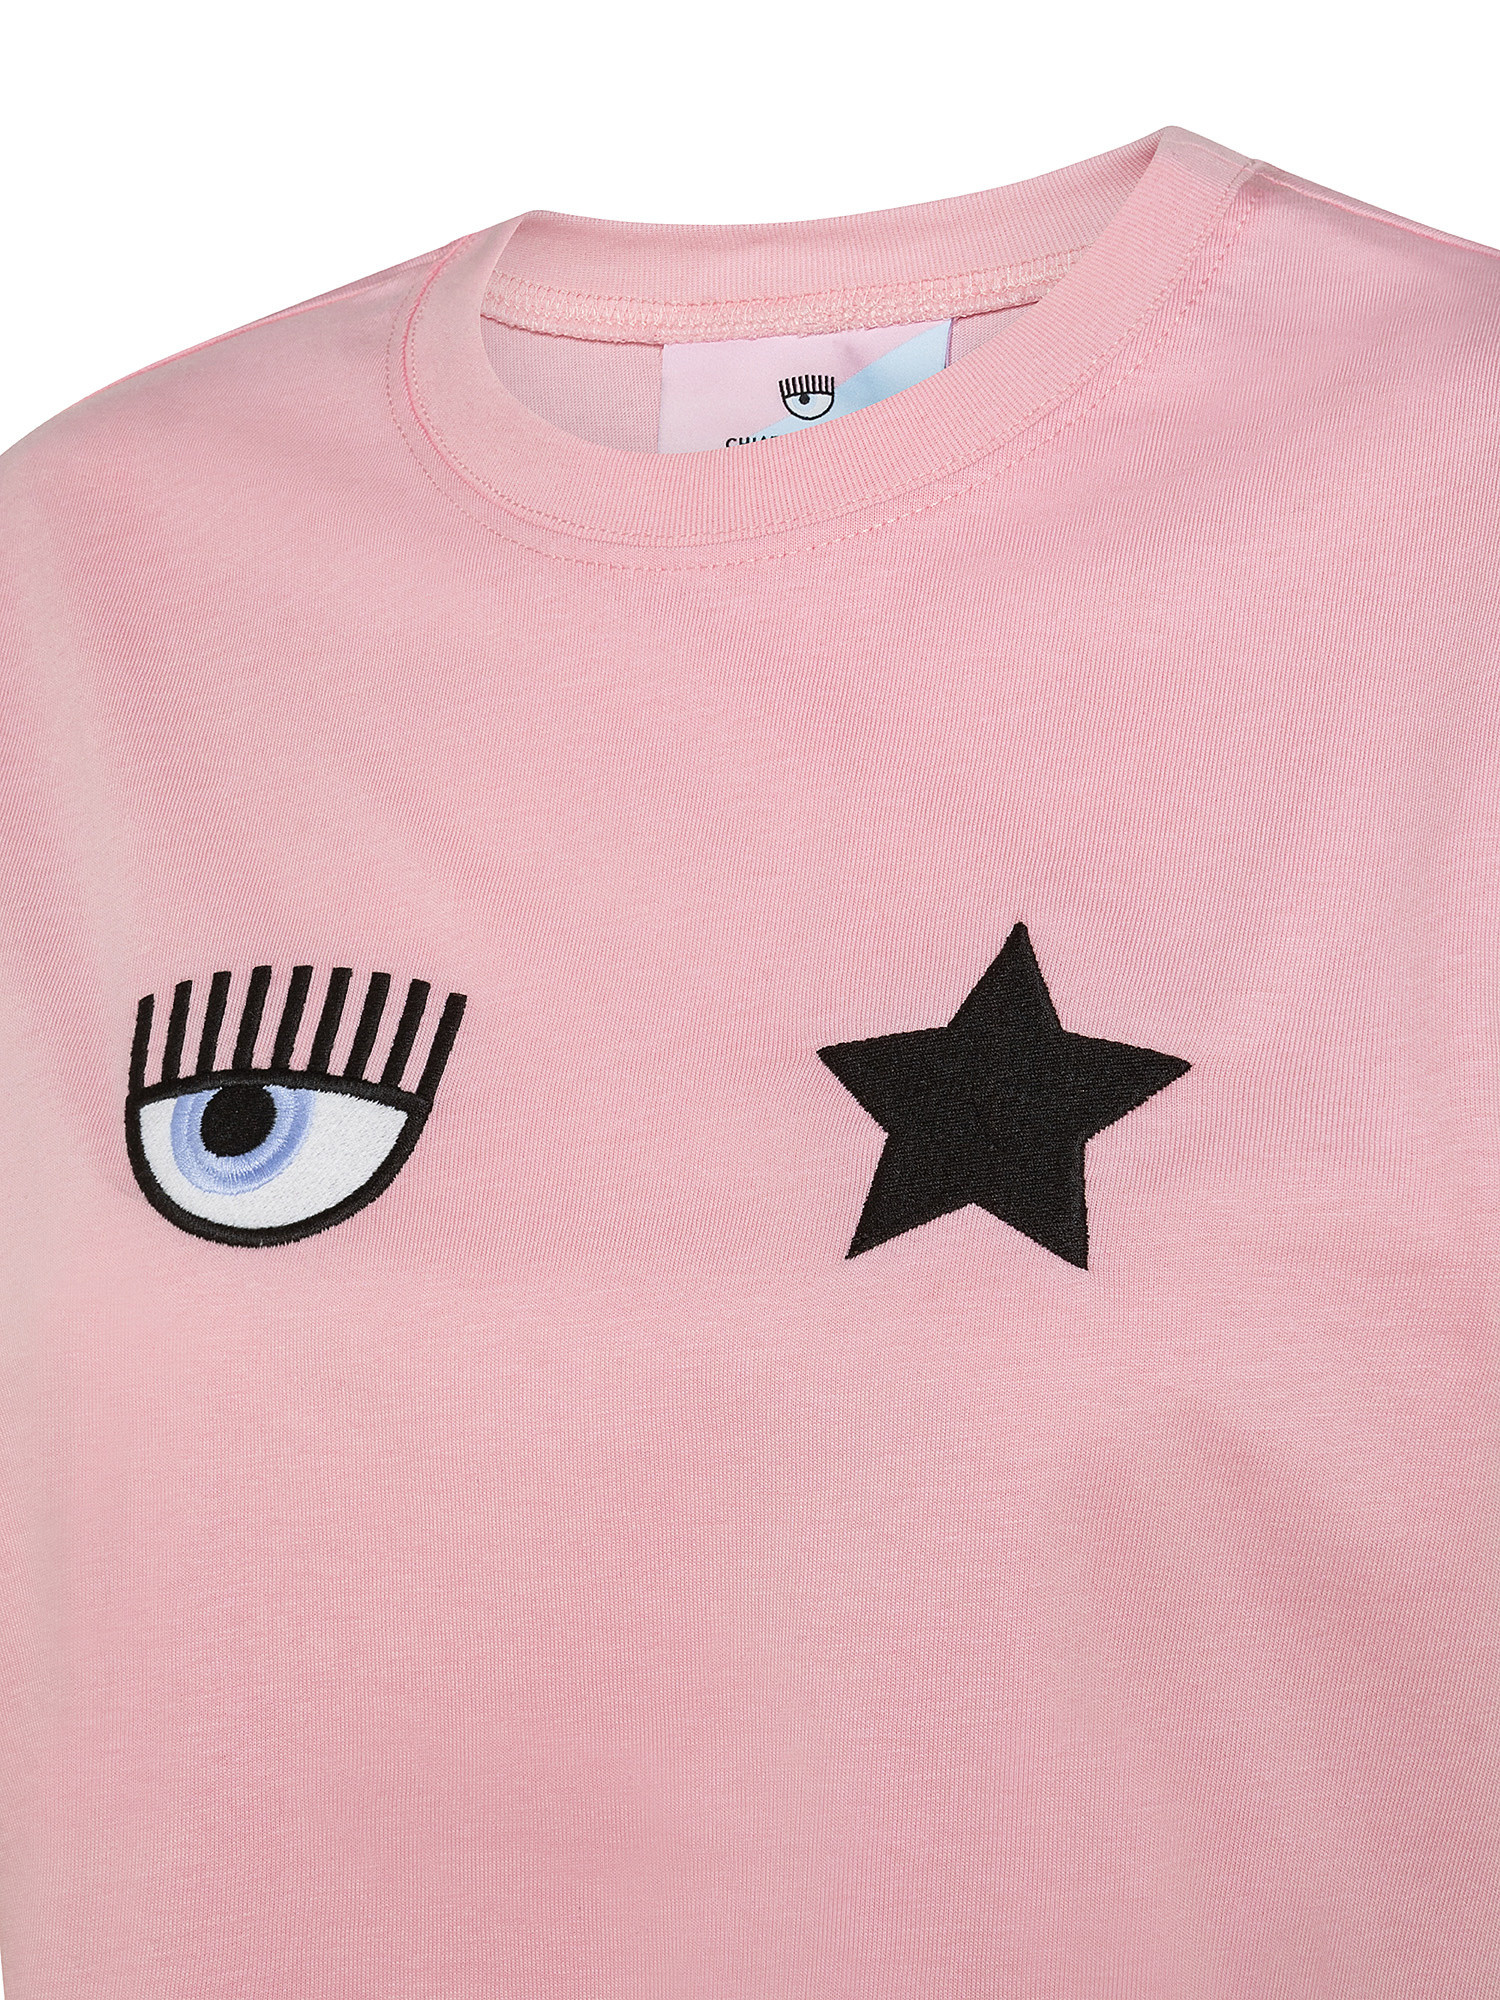 T-shirt Eye Star, Rosa, large image number 2